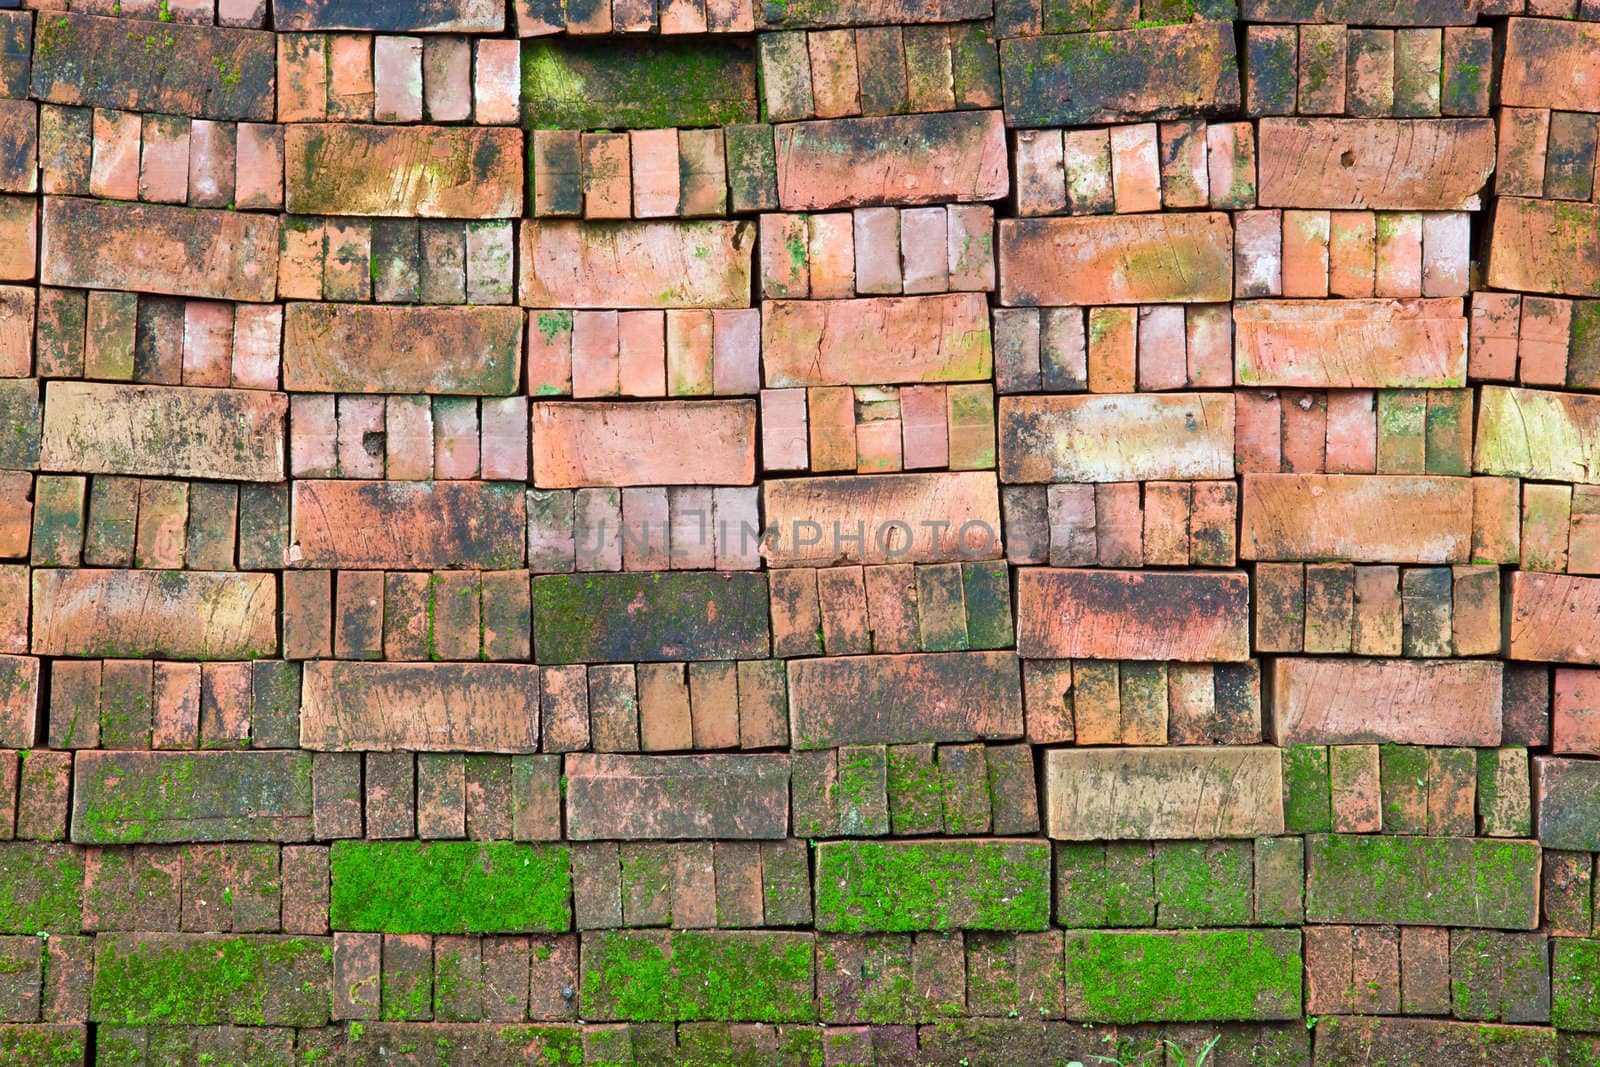 Tile brick Texture by Suriyaphoto